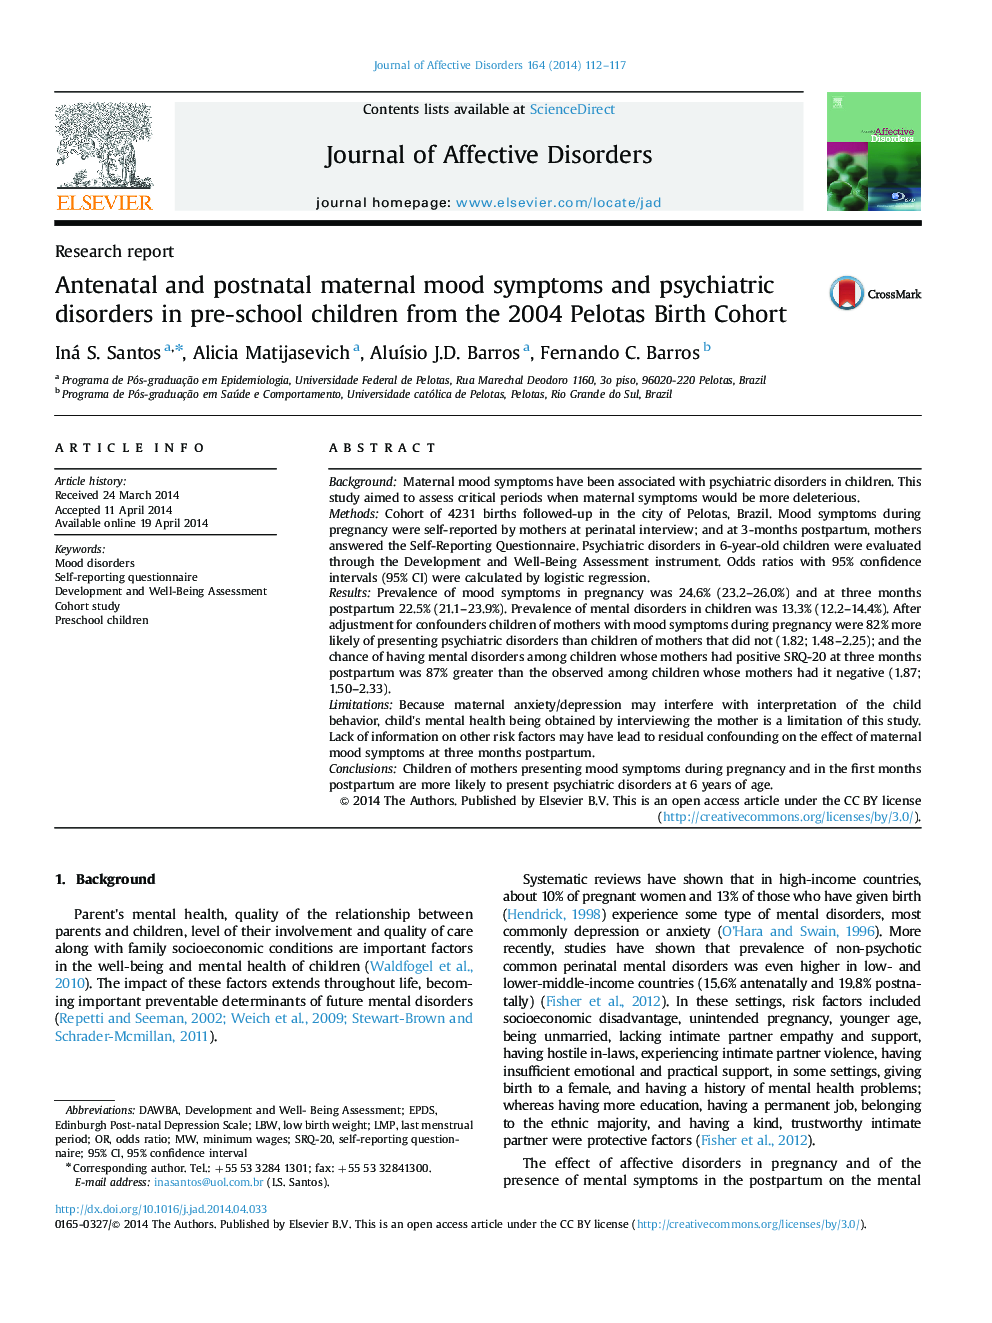 Antenatal and postnatal maternal mood symptoms and psychiatric disorders in pre-school children from the 2004 Pelotas Birth Cohort